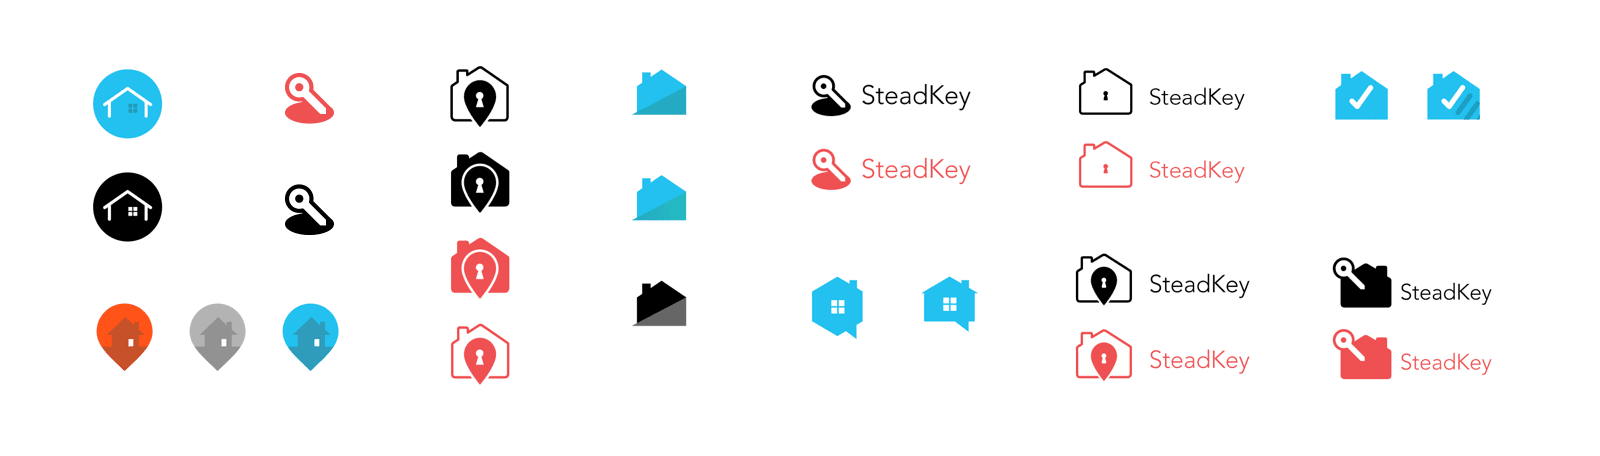 Medium fidelity logo design concepts for Steadkey